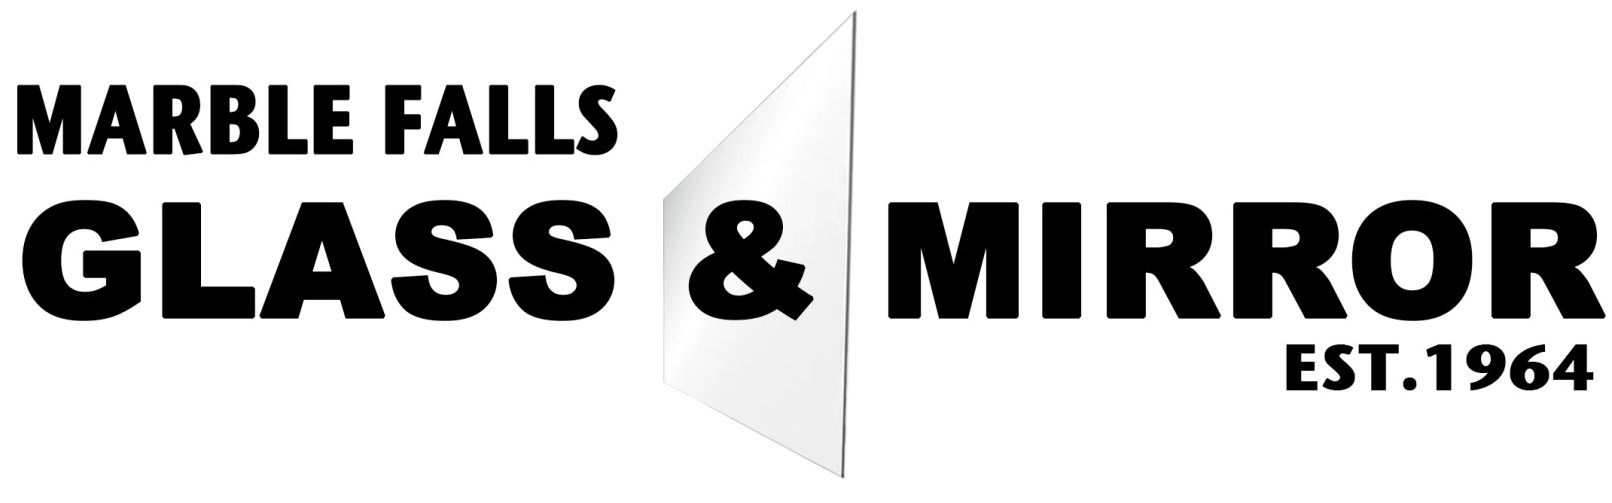 Marble Falls Glass & Mirror Inc - logo